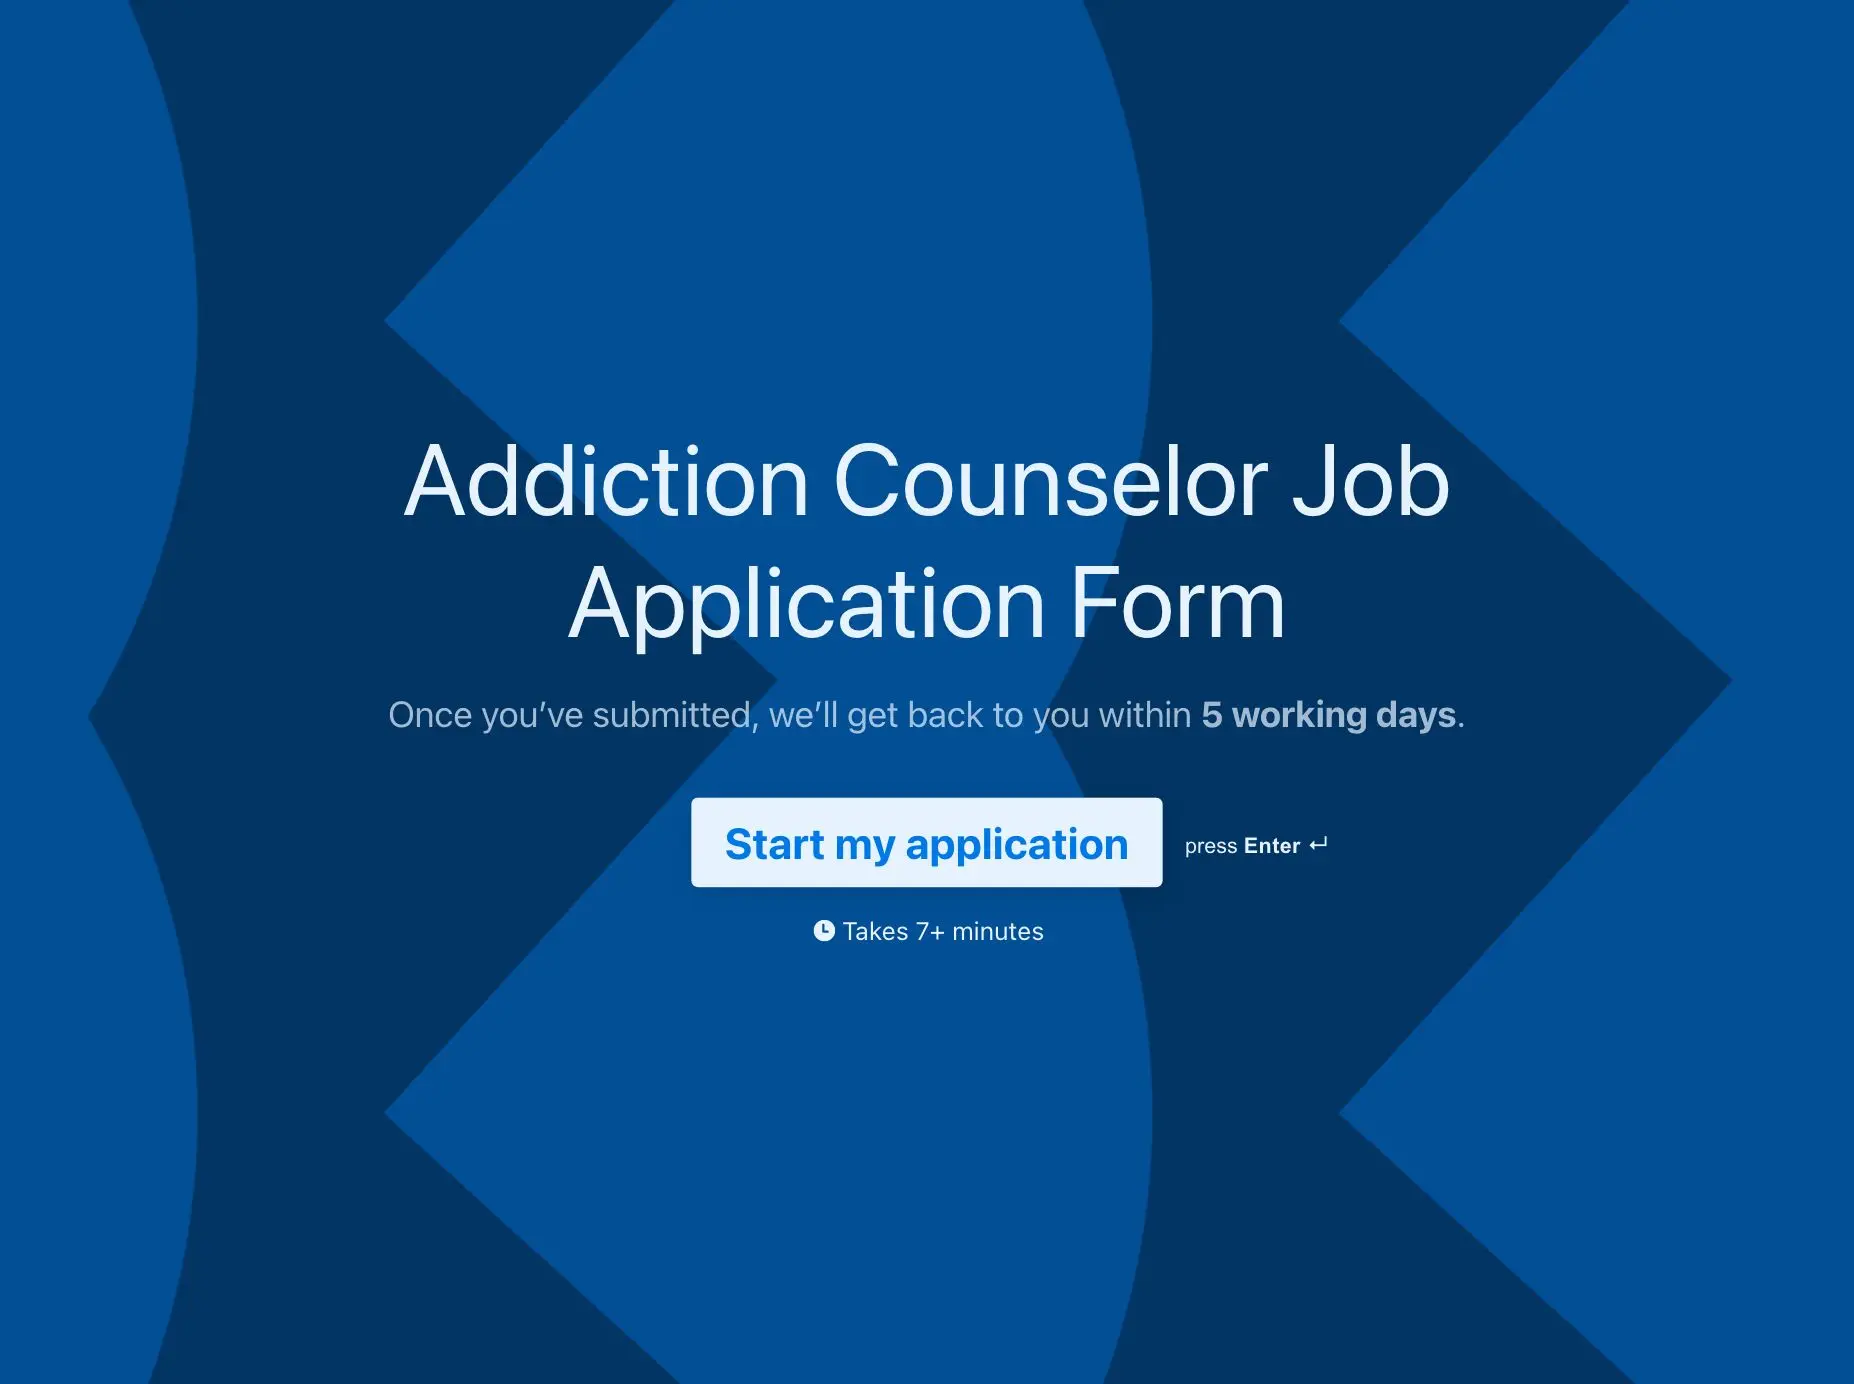 Addiction Counselor Job Application Form Template Hero